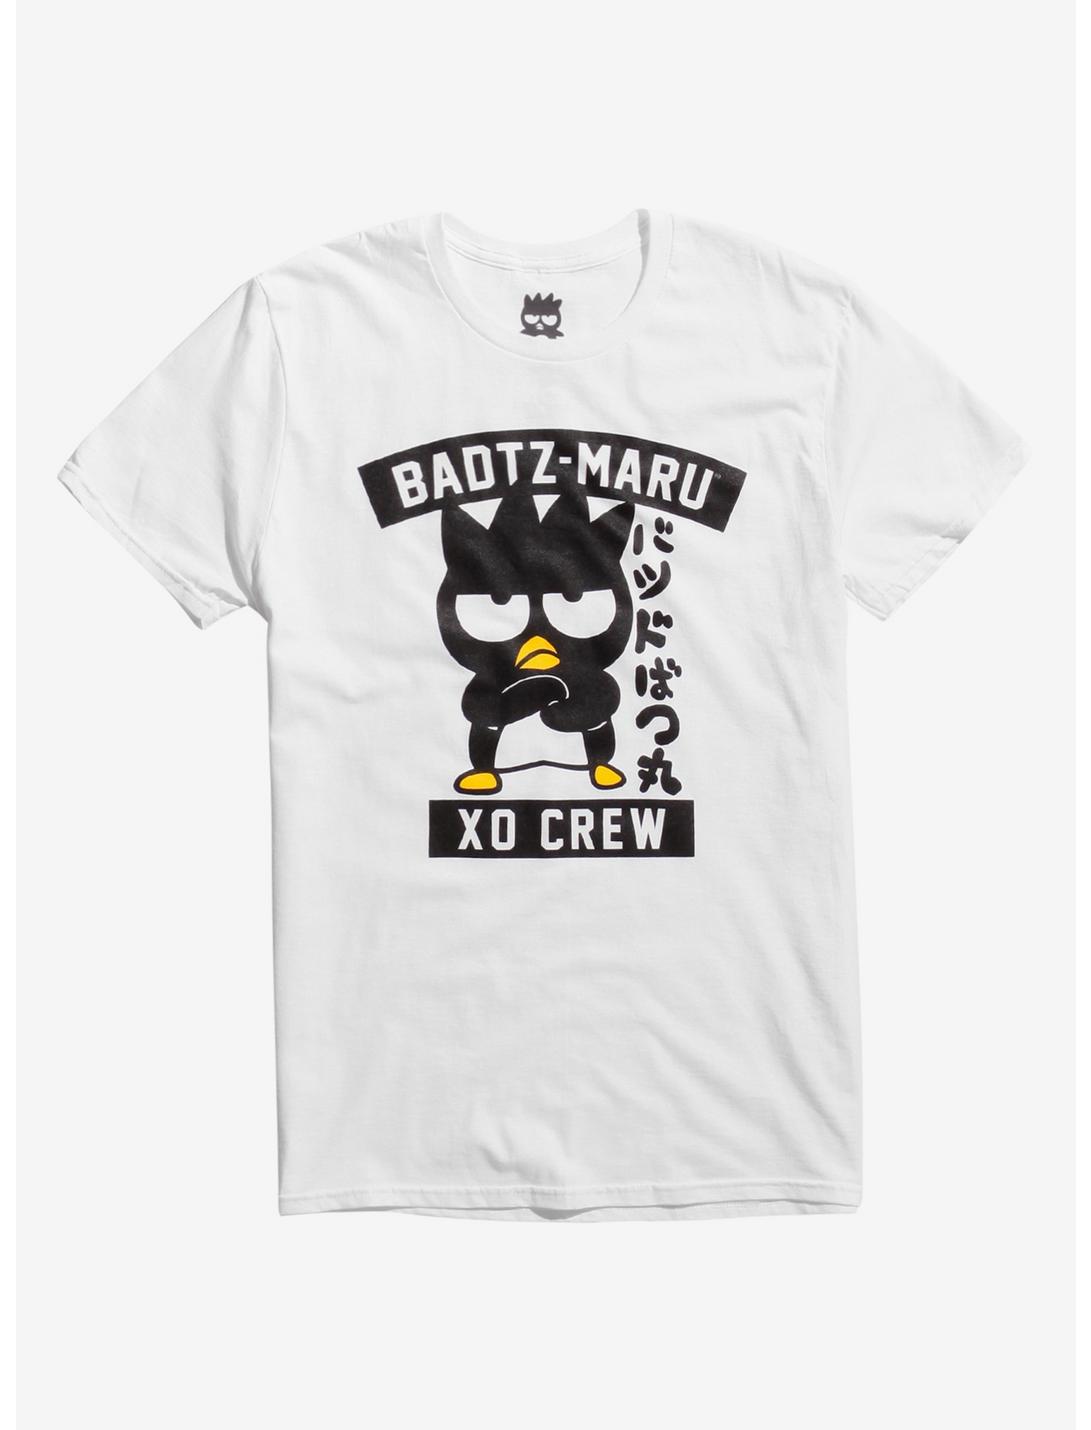 Badtz-Maru XO Crew T-Shirt, WHITE, hi-res